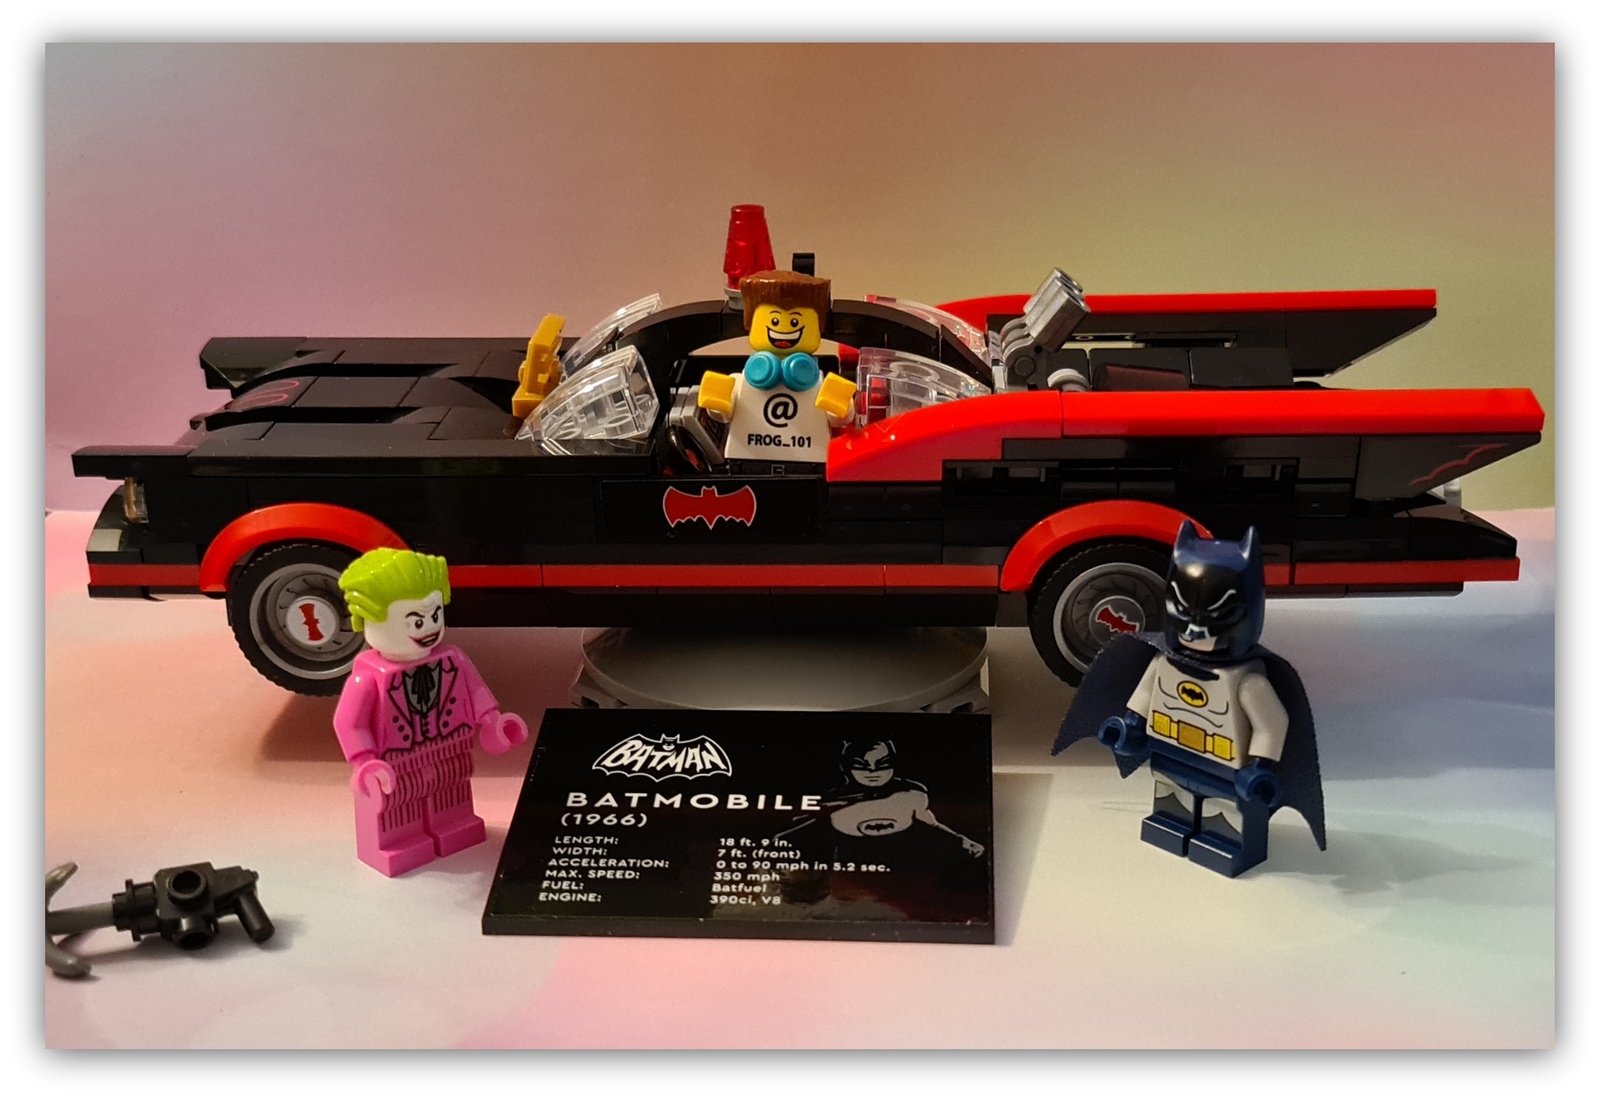 Batman Lego Set Allows To Create Batmobile From Upcoming Robert